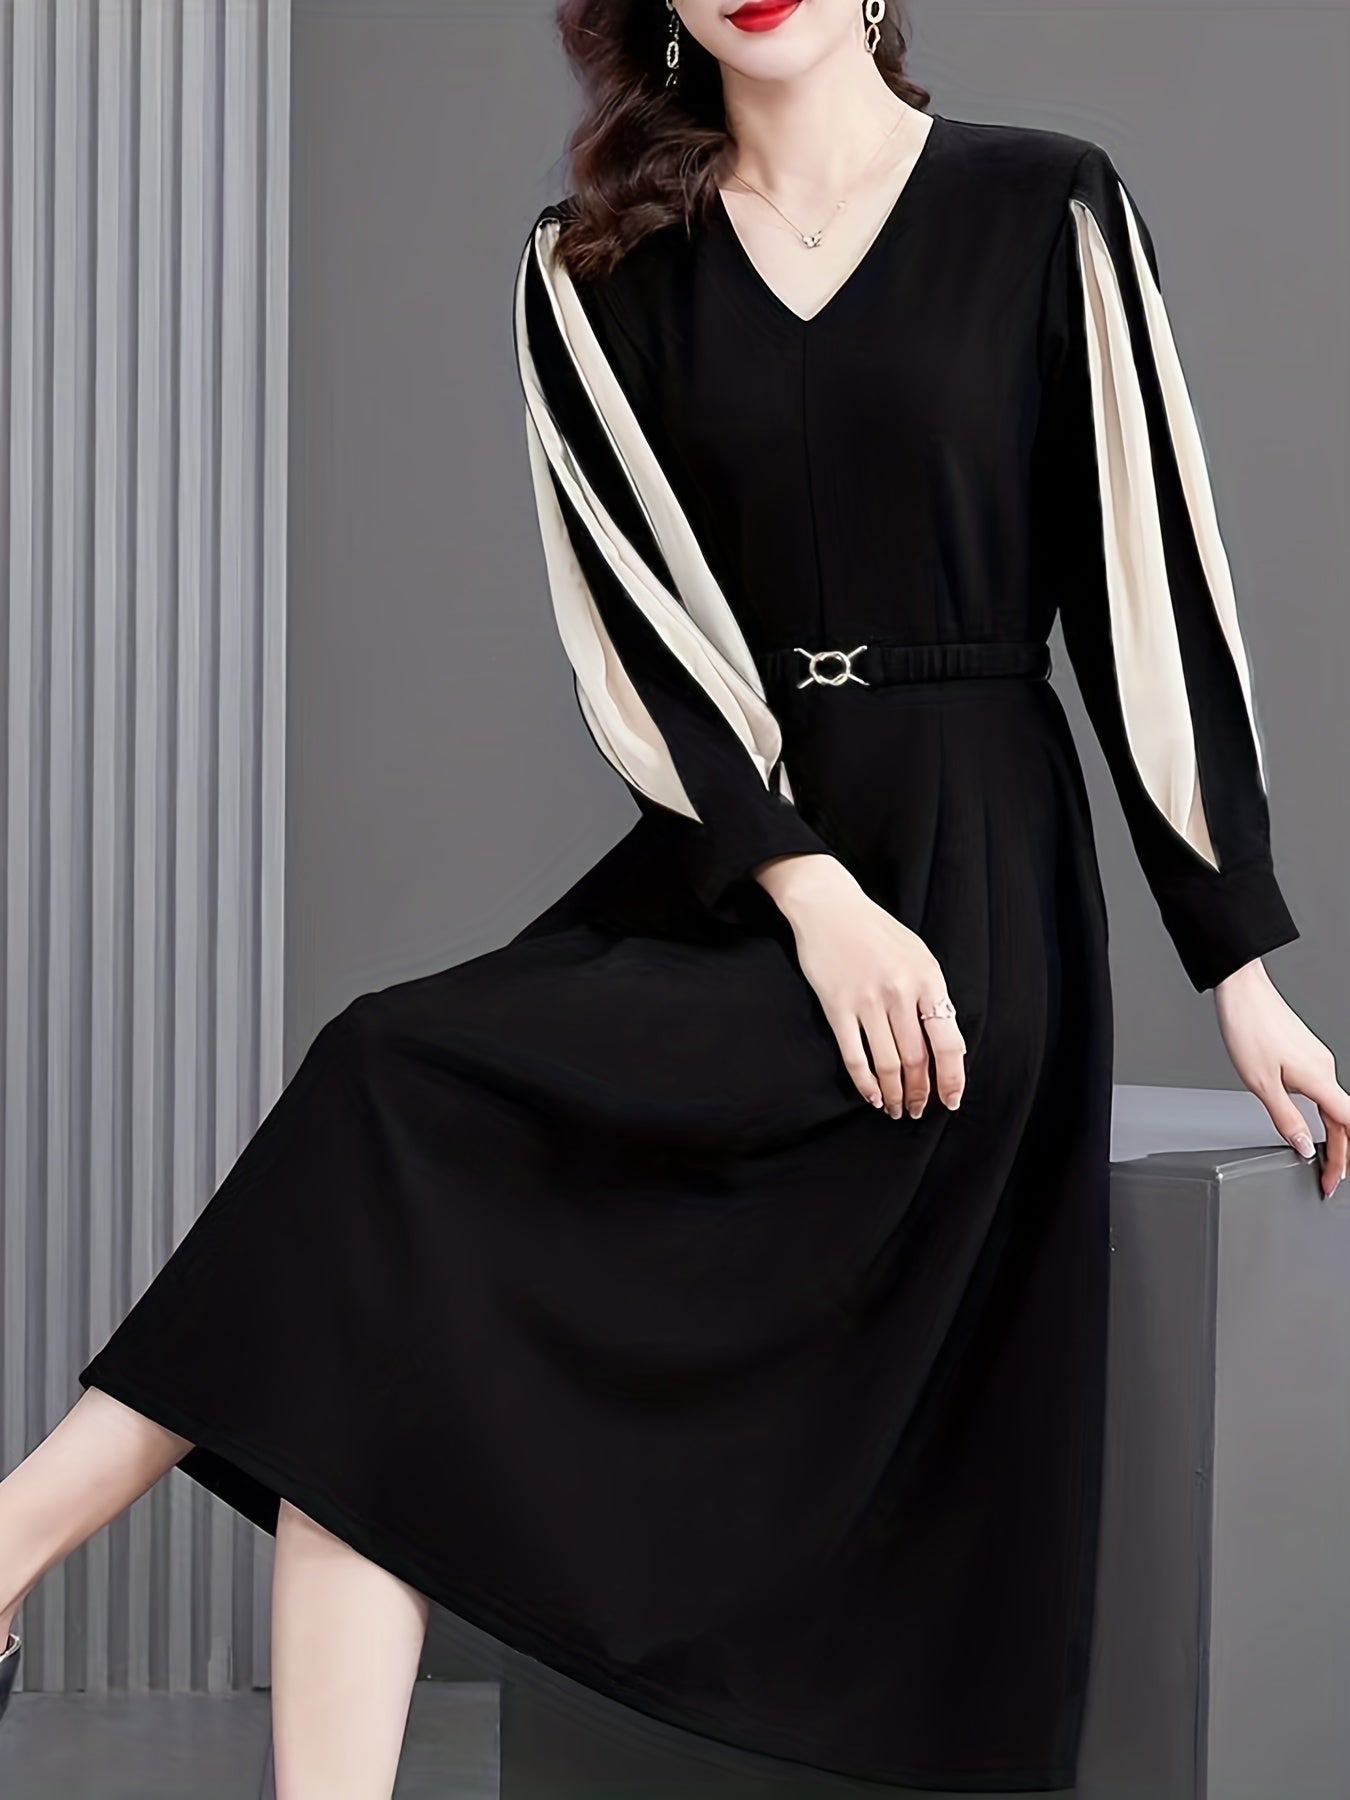 Vzyzv Color Block V Neck Dress, Casual Long Sleeve Versatile Dress, Women's Clothing